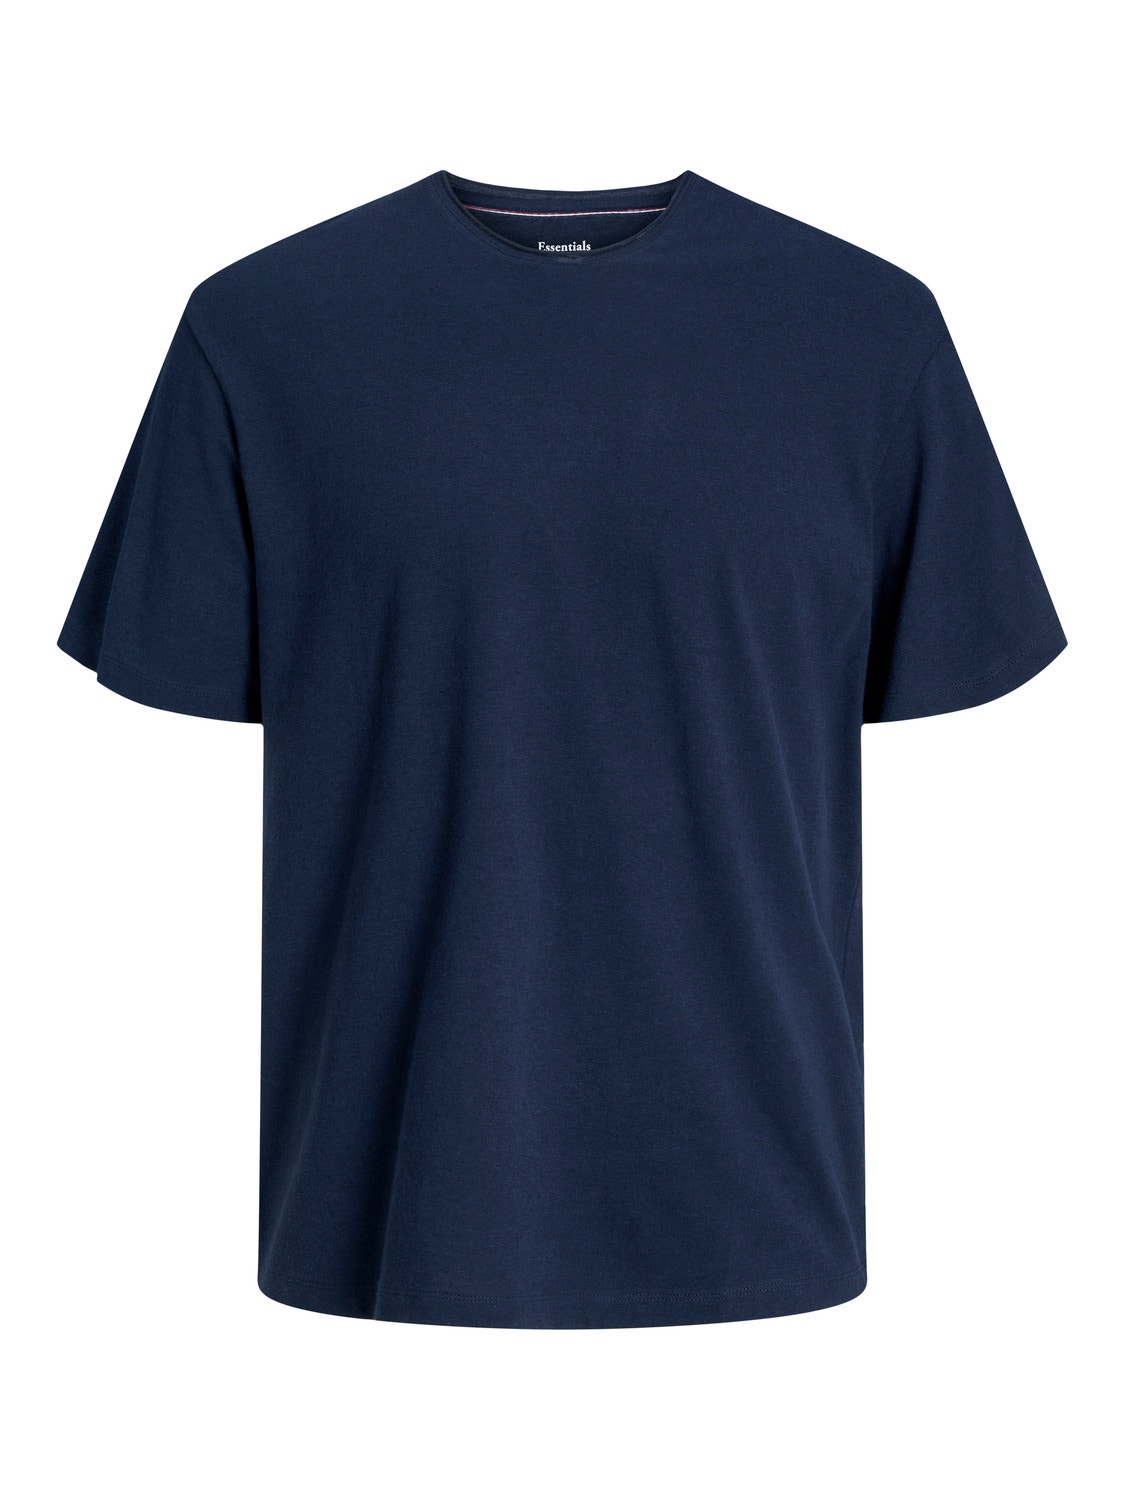 Jack & Jones T-shirt Uni Col rond -Navy Blazer - 12246718